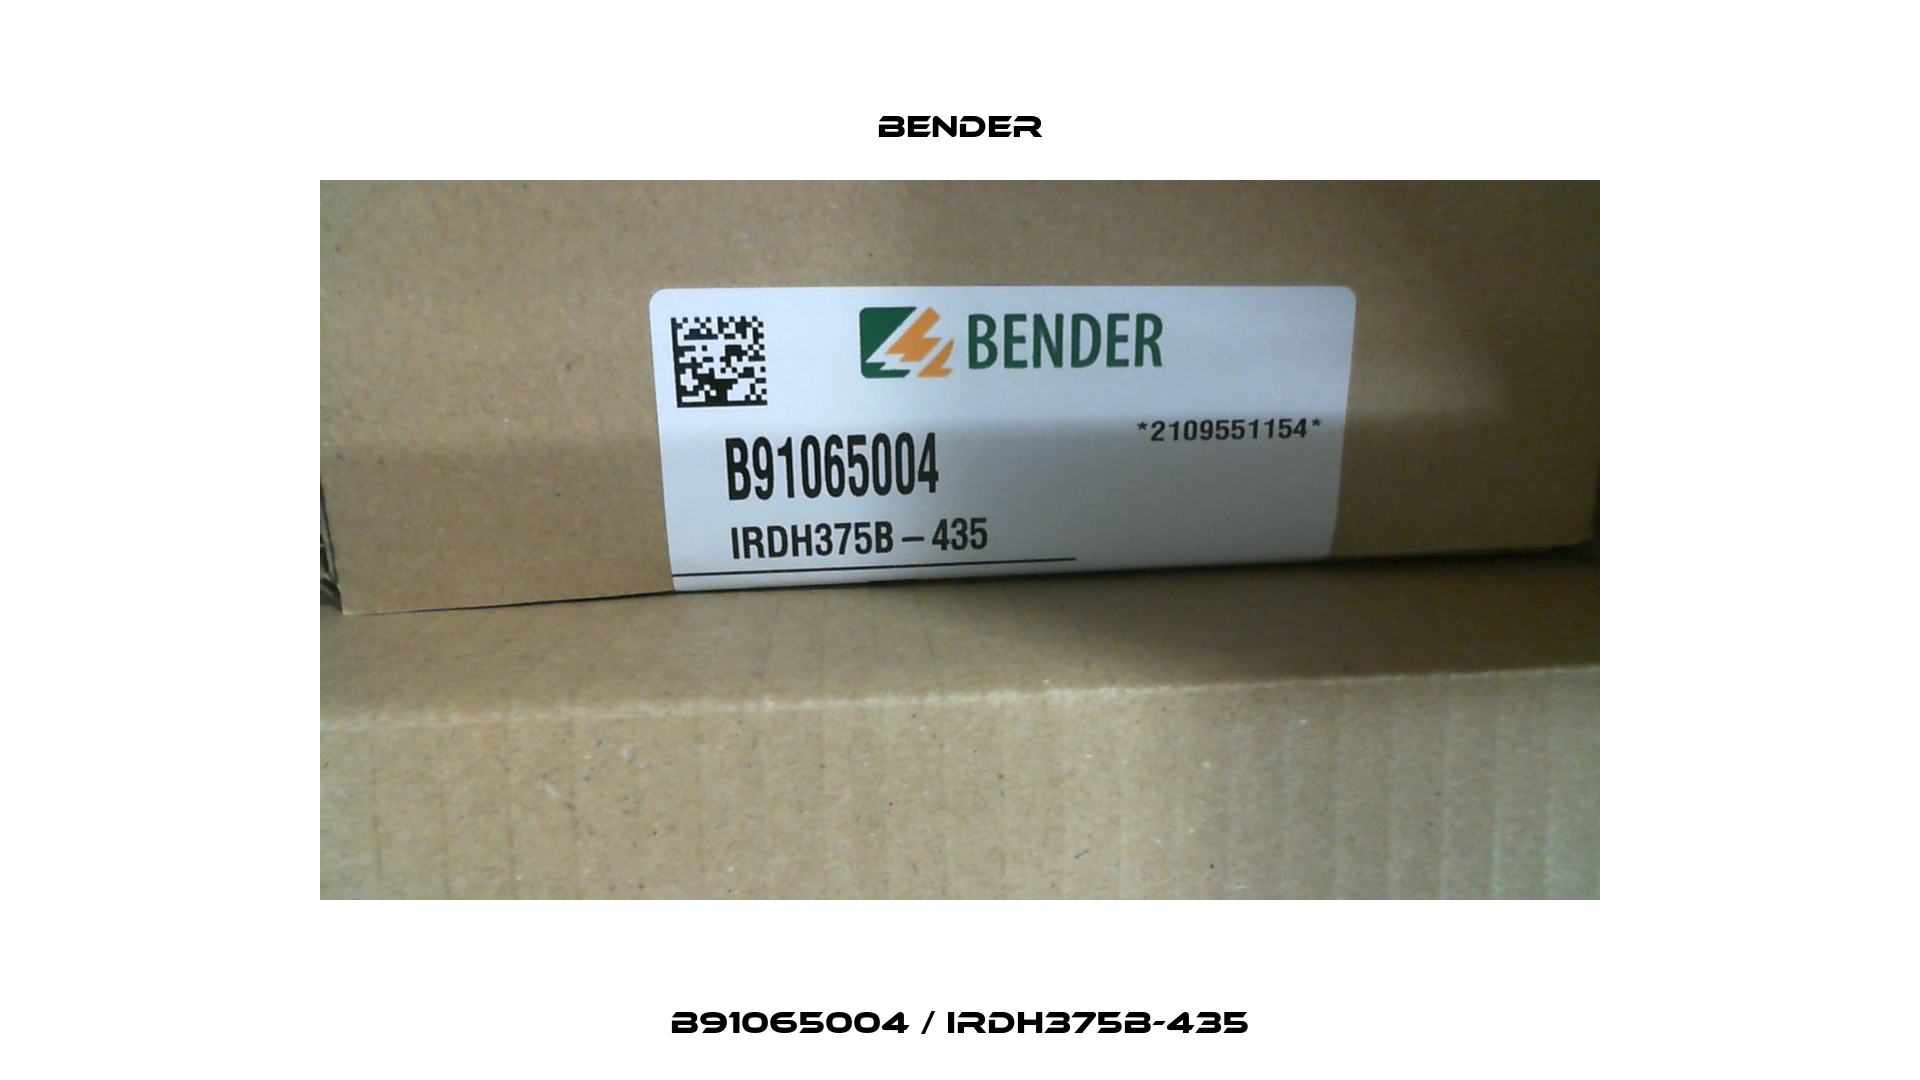 B91065004 / IRDH375B-435 Bender